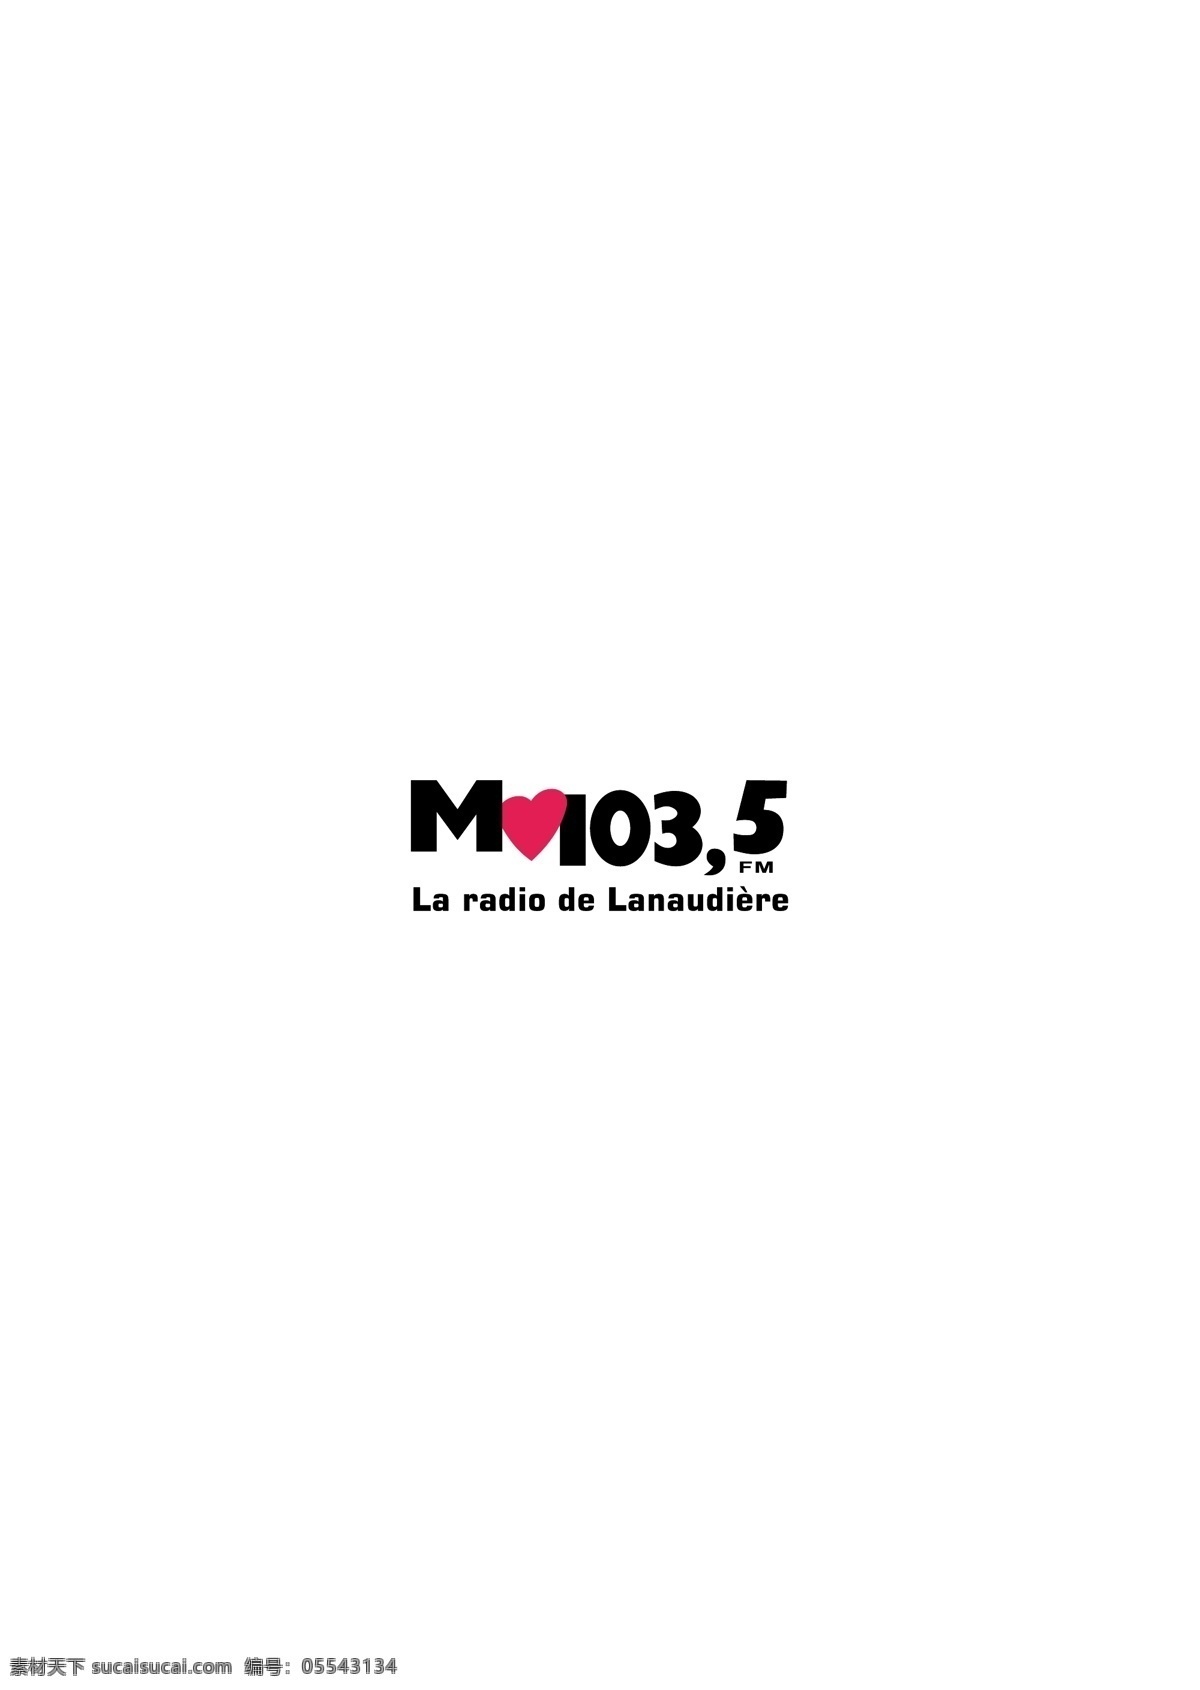 m radio logo 设计欣赏 标志设计 欣赏 矢量下载 网页矢量 商业矢量 logo大全 红色